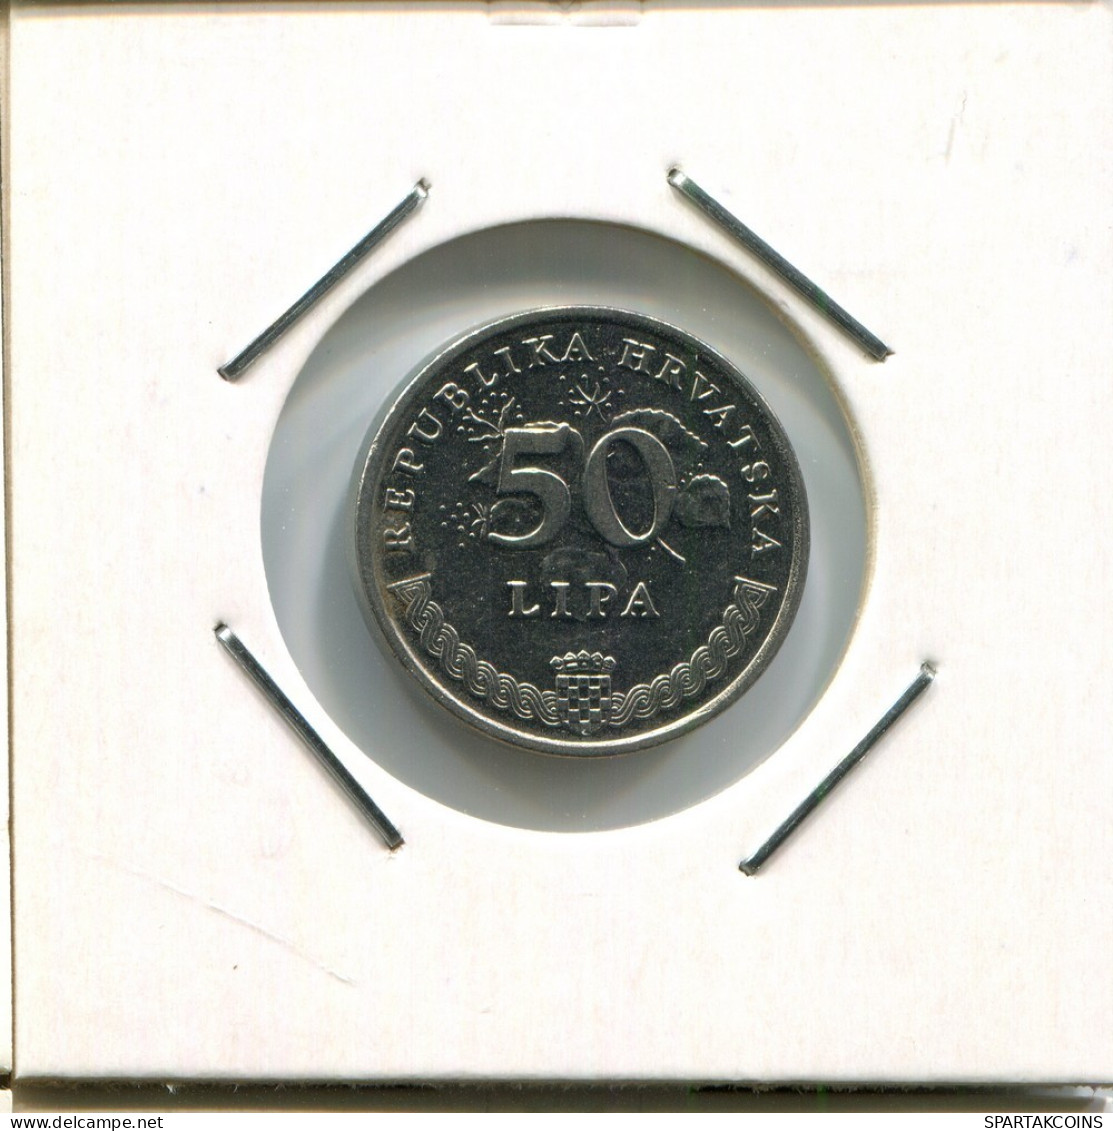 50 LIPA 1993 CROATIA Coin #AR666.U.A - Croatie